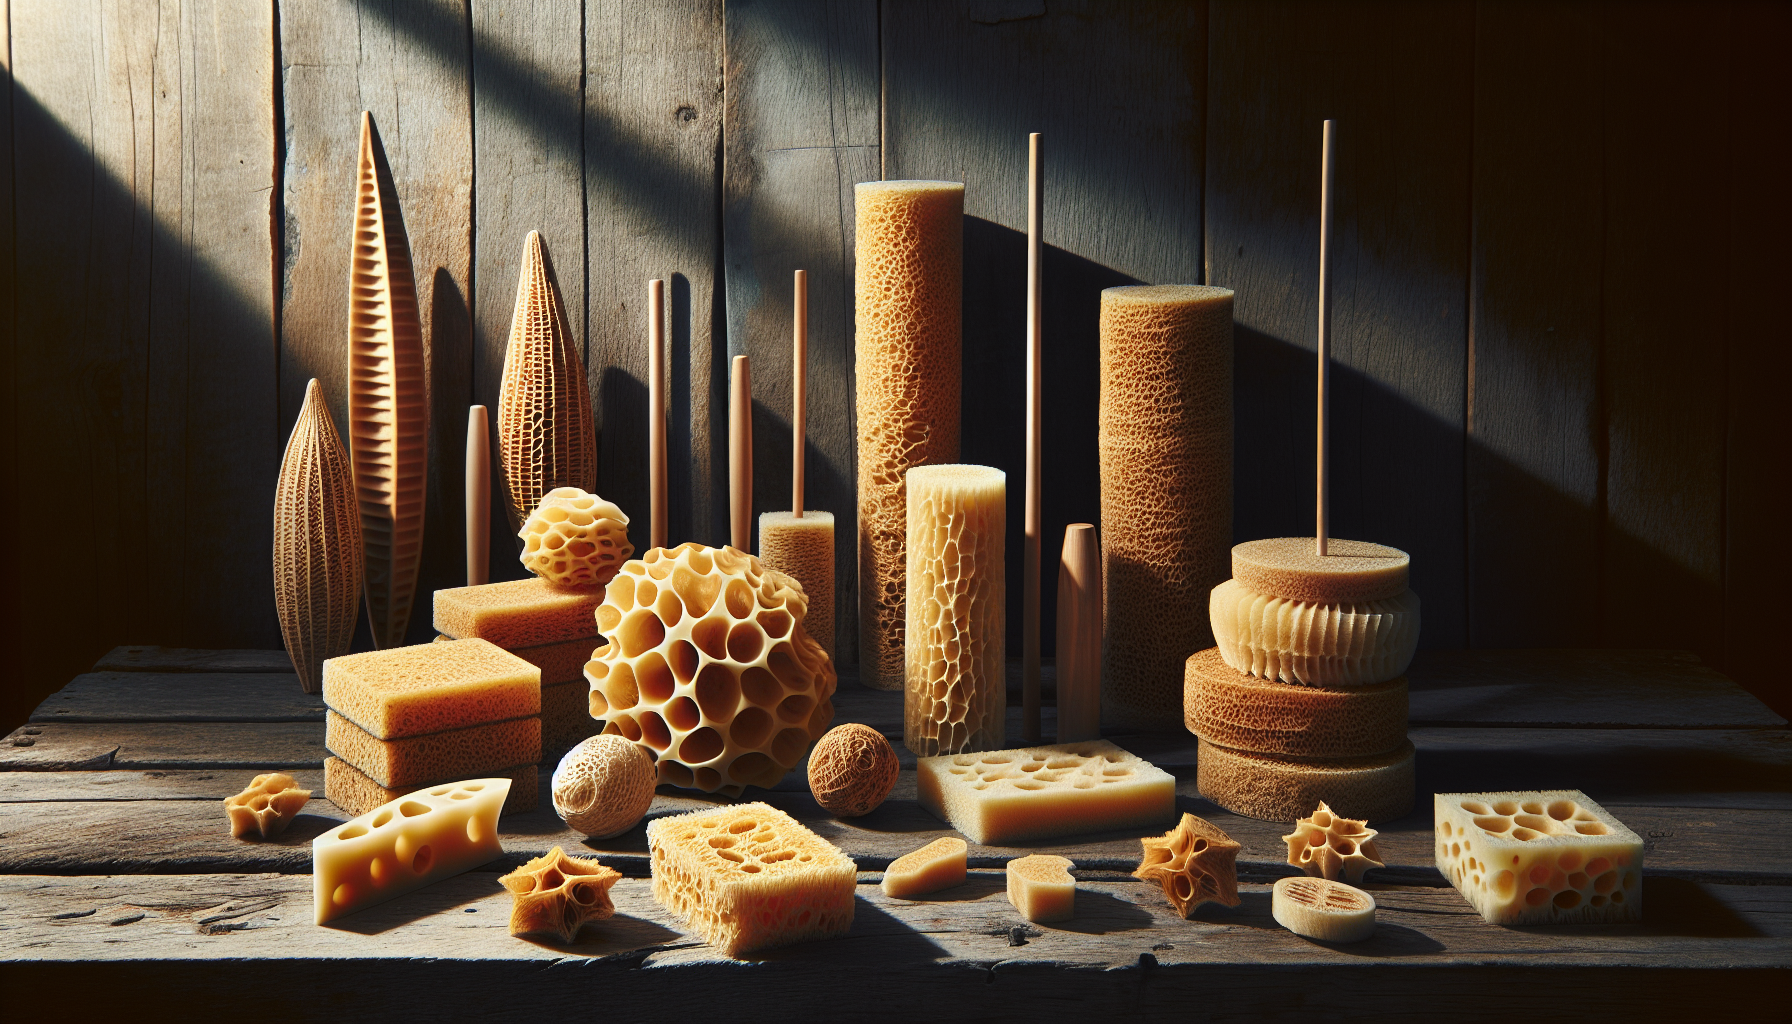 Sea Sponge Wholesale | Various wholesale sea sponges displayed on a rustic wooden surface